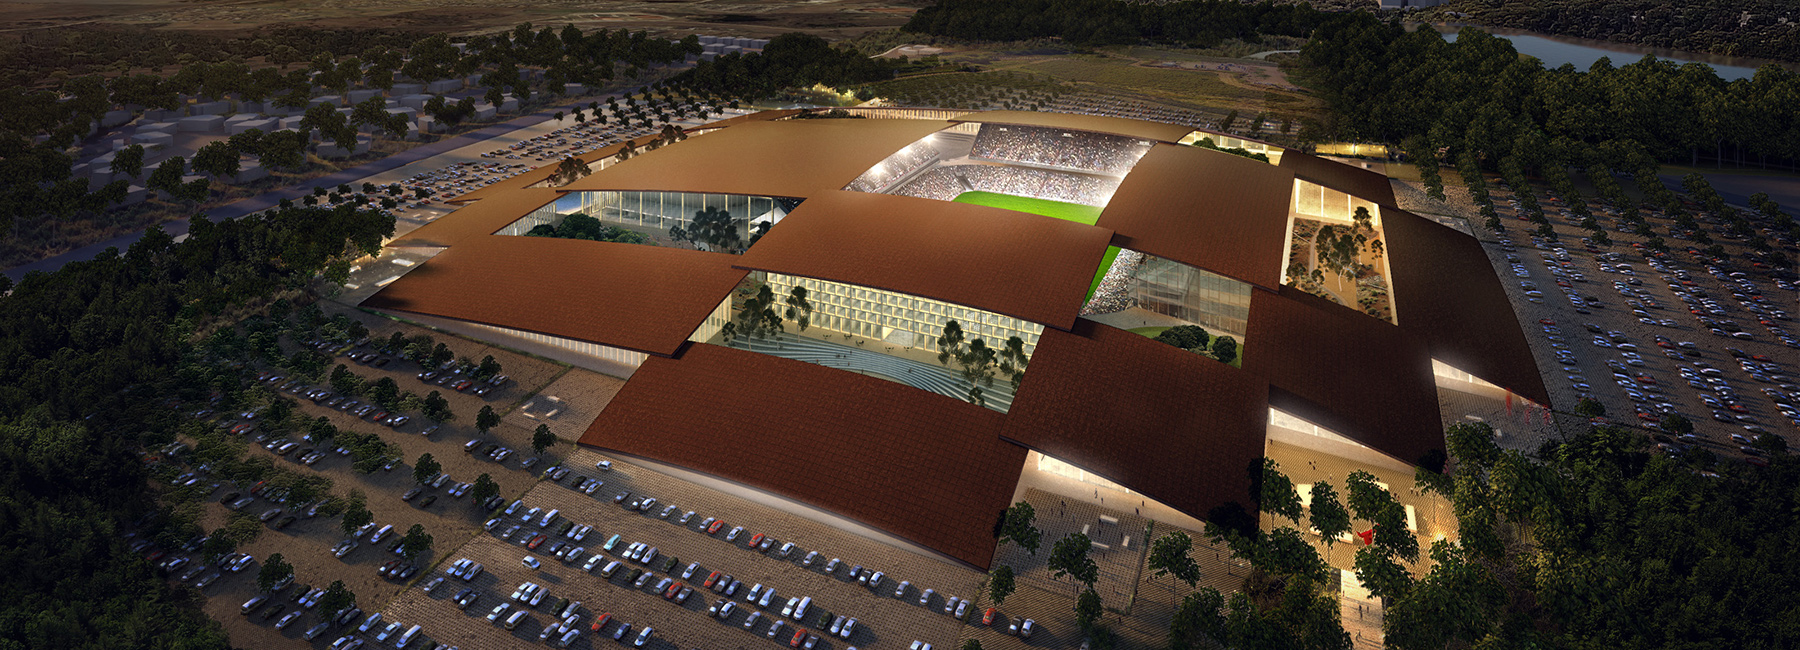 bjarke-ingels-group-BIG-east-austin-district-texas-stadium-designboom-1800.jpg